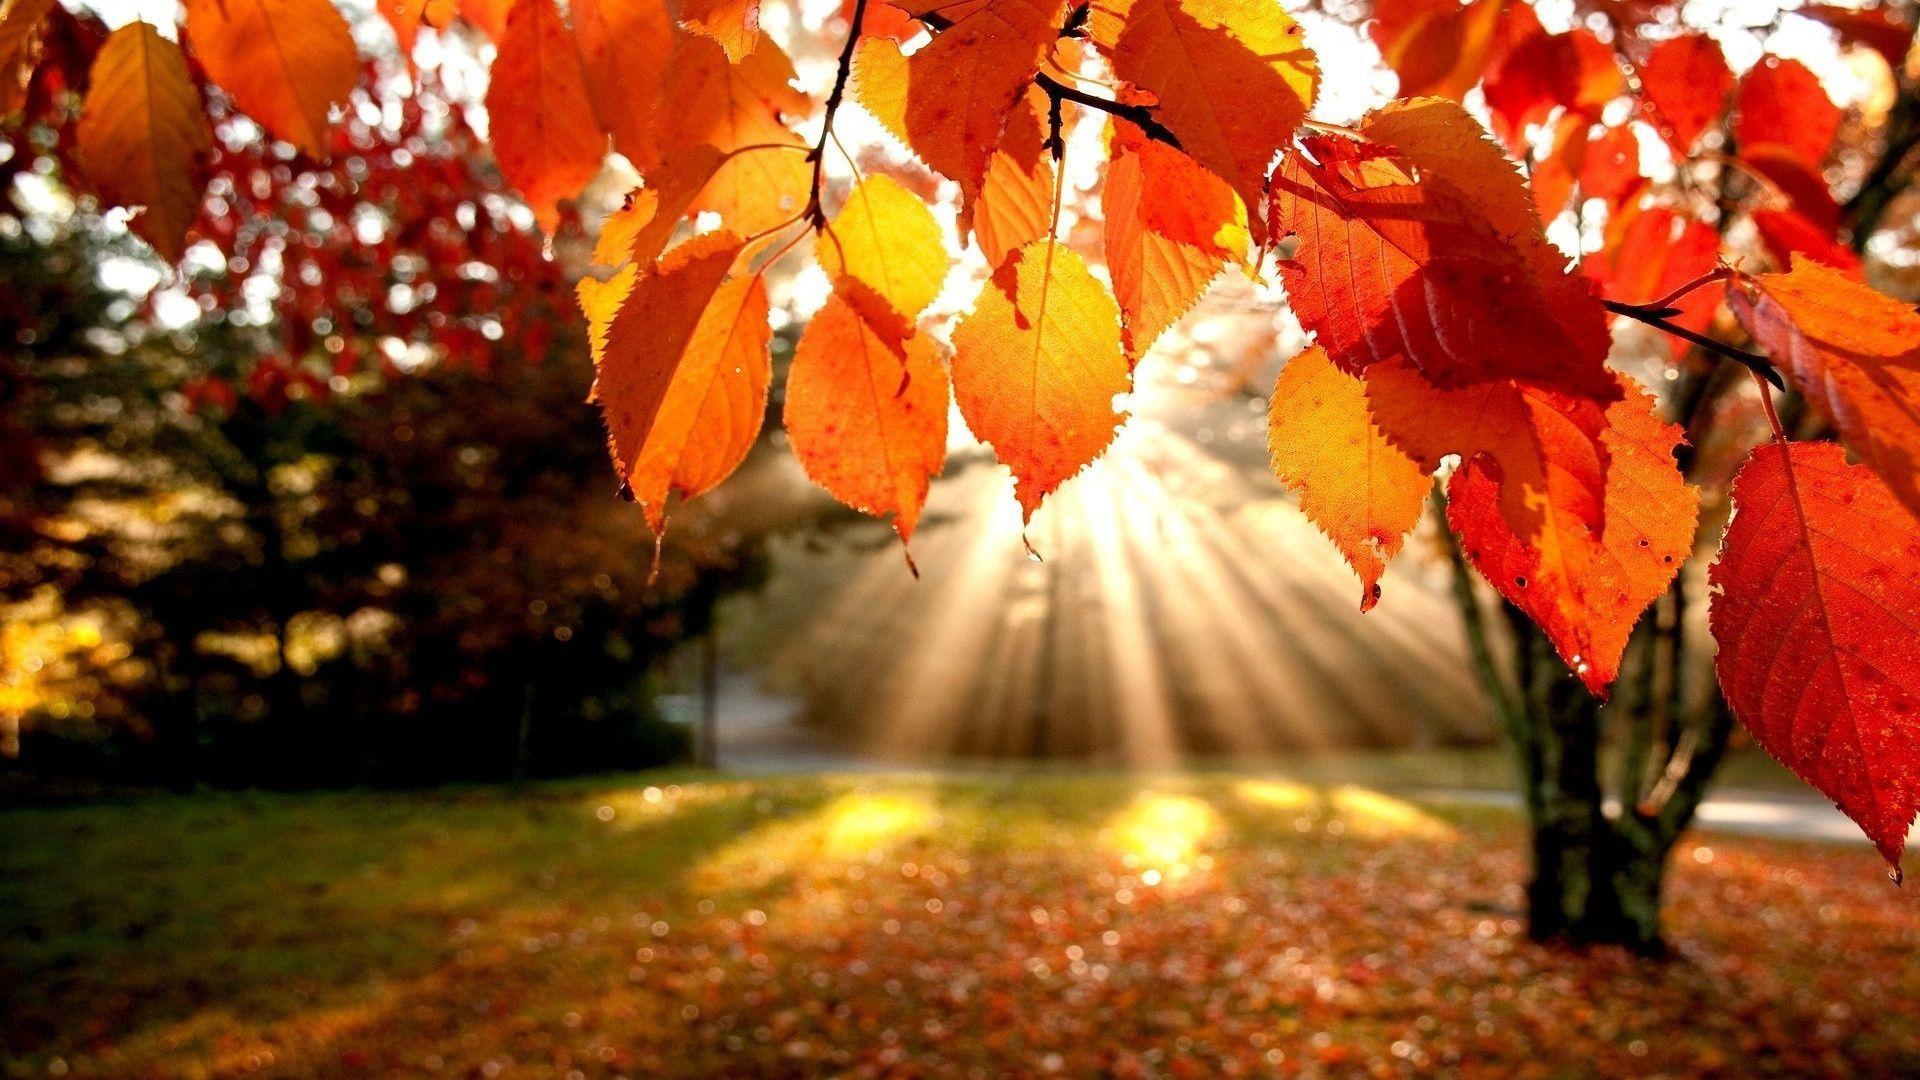 Autumn Leaves Fall Season HD Free Wallpaper Background Image